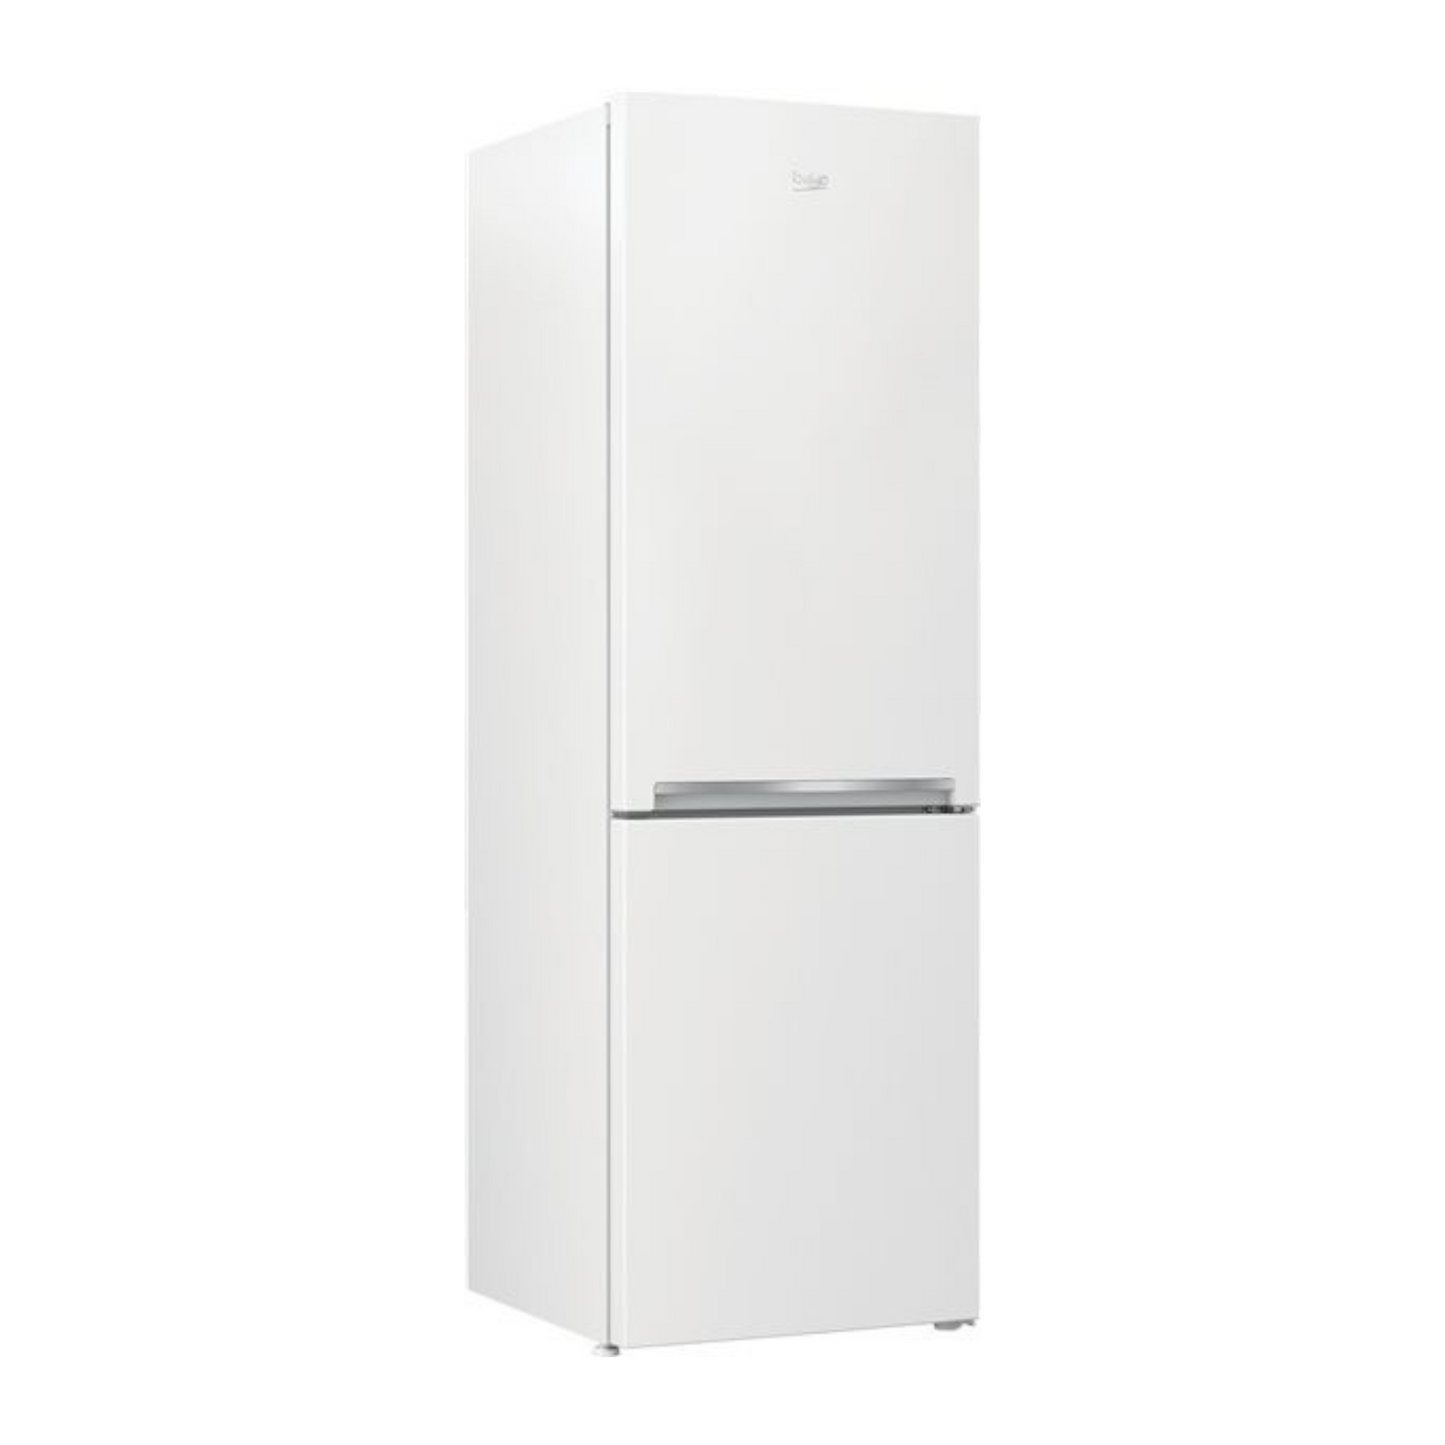 Beko 365L Refrigerator, RCNE365K20W